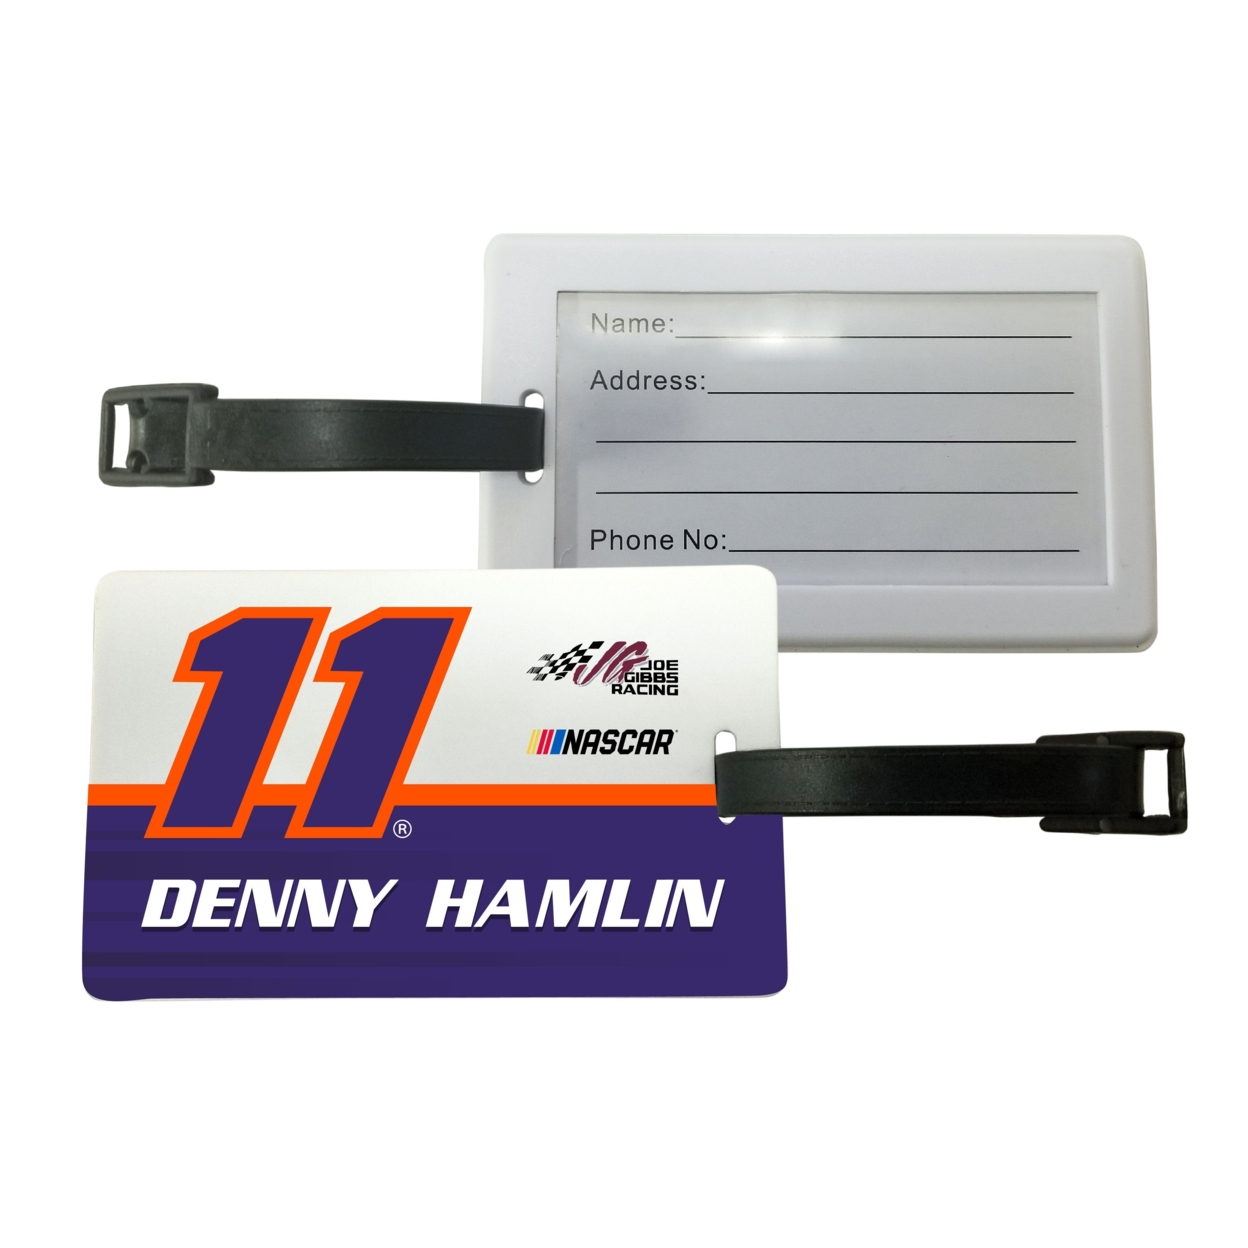 #11 Denny Hamlin Officially Licensed Luggage Tag